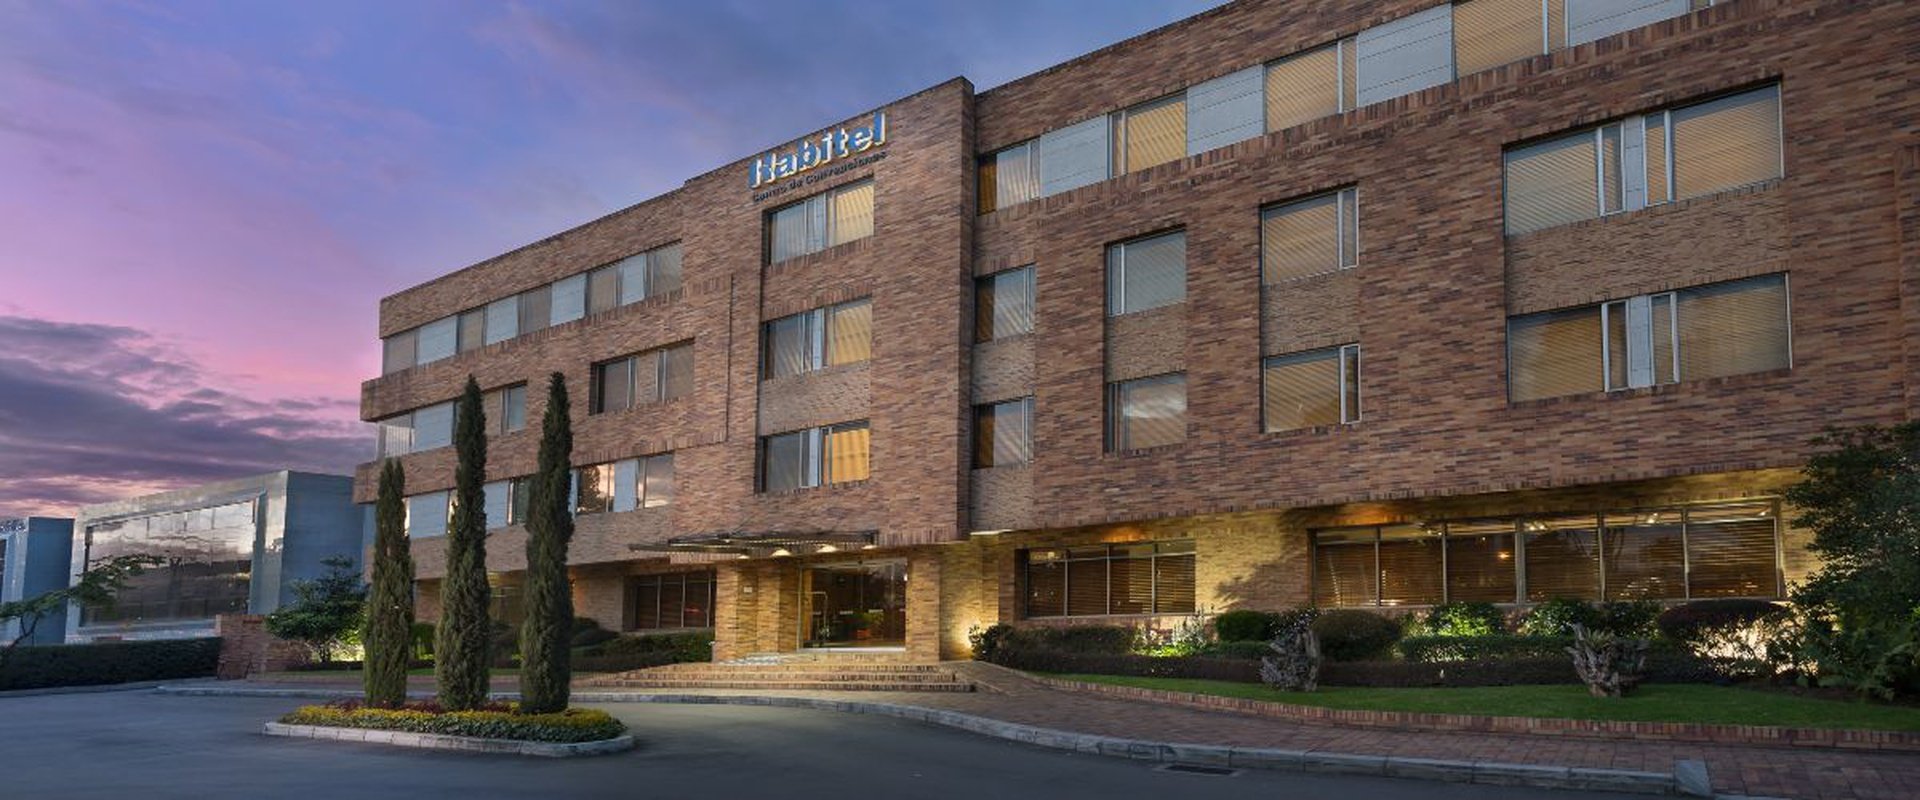 Hotel habitel select Hotel Habitel Select Bogotá